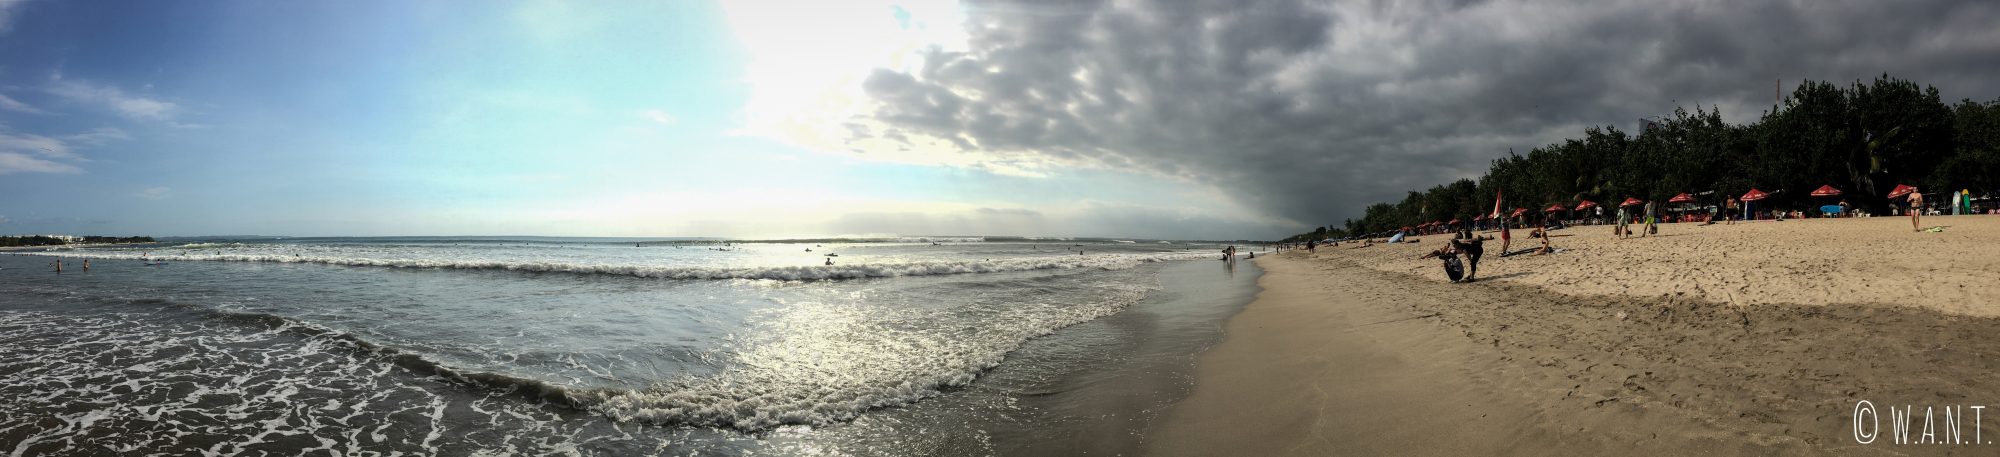 Panorama de la plage de Kuta à Bali